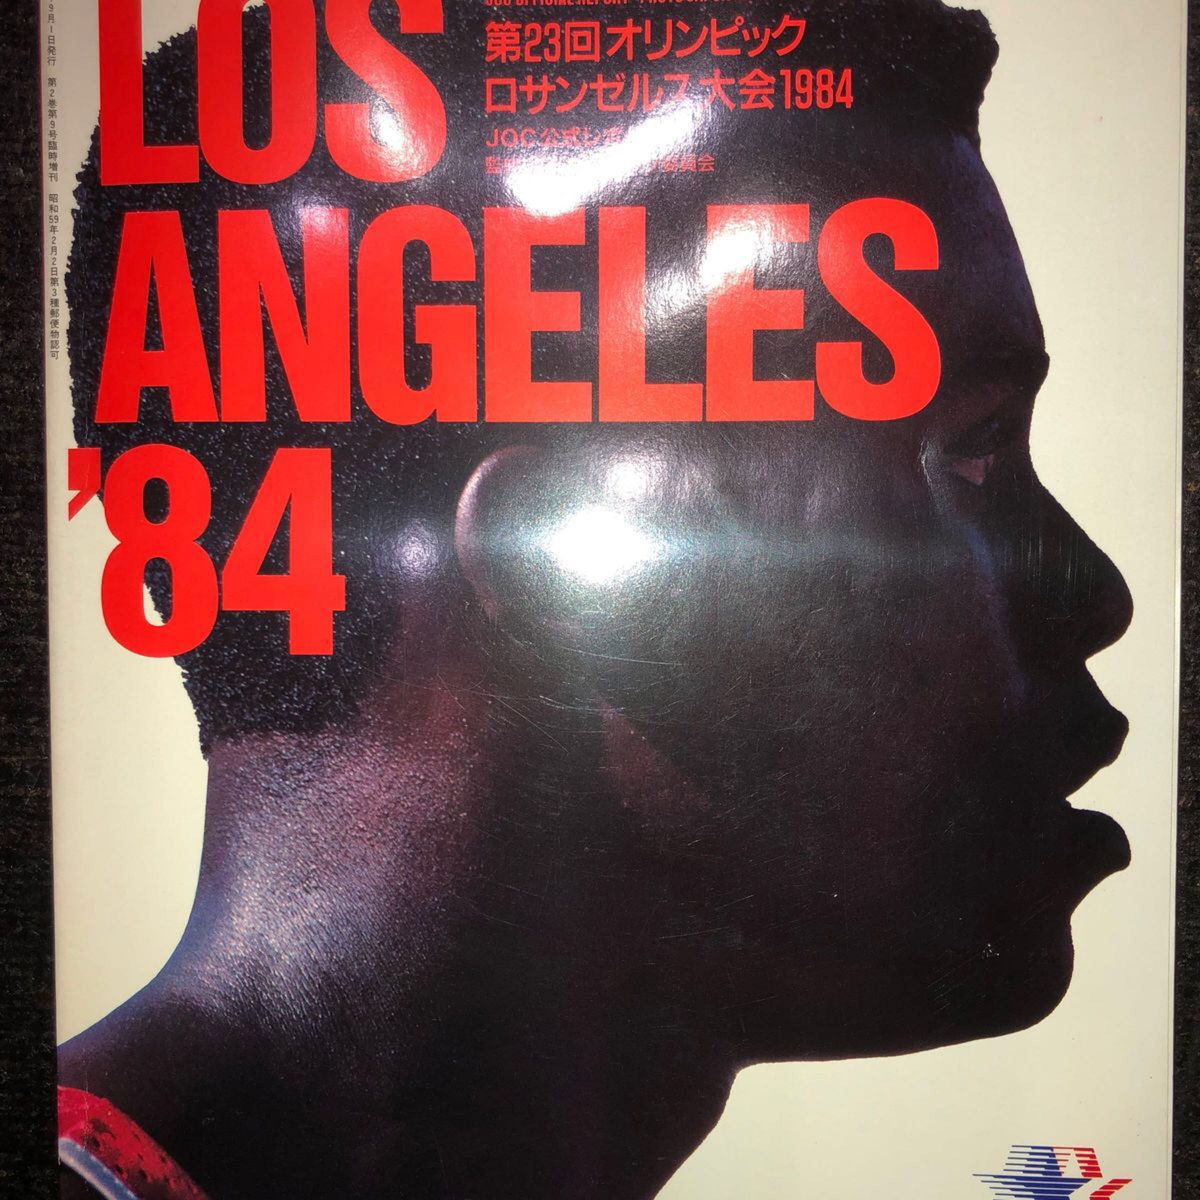 LOS ANGELES 84